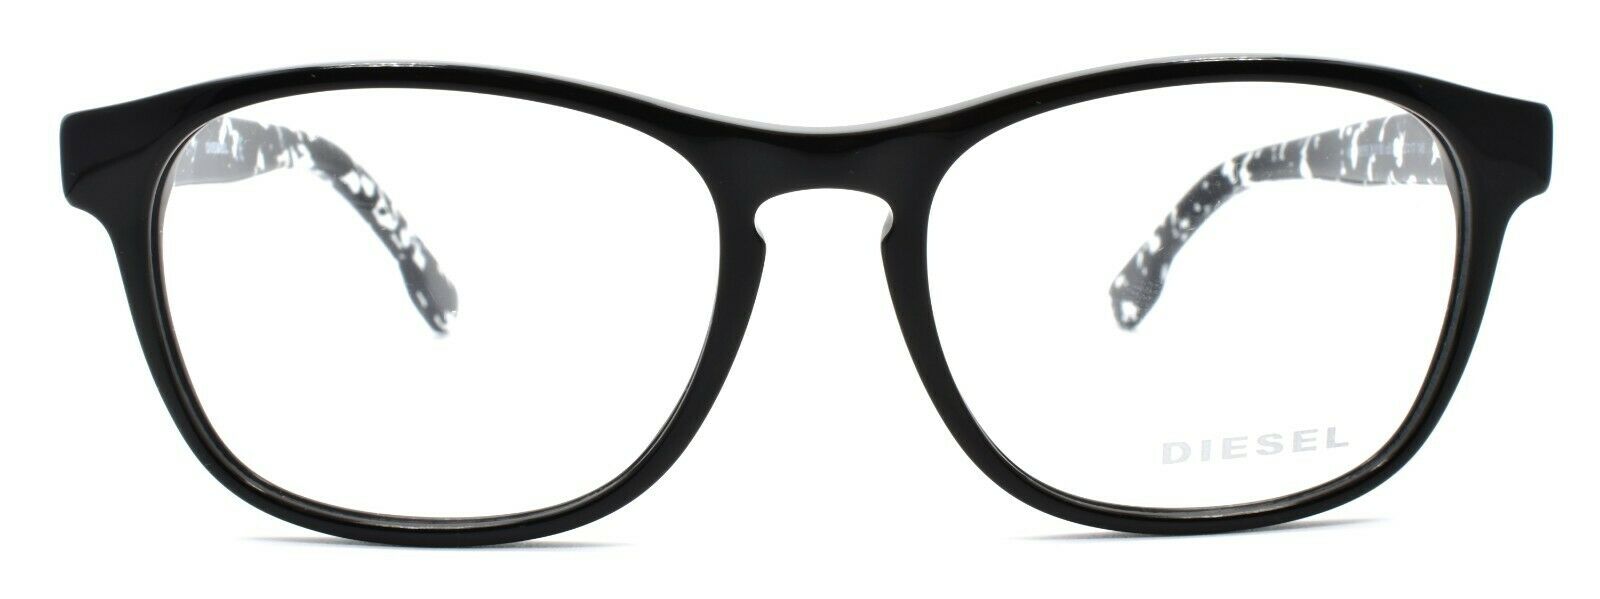 2-Diesel DL5190 001 Unisex Eyeglasses Frames 52-17-145 Black / Blue Denim-664689763993-IKSpecs